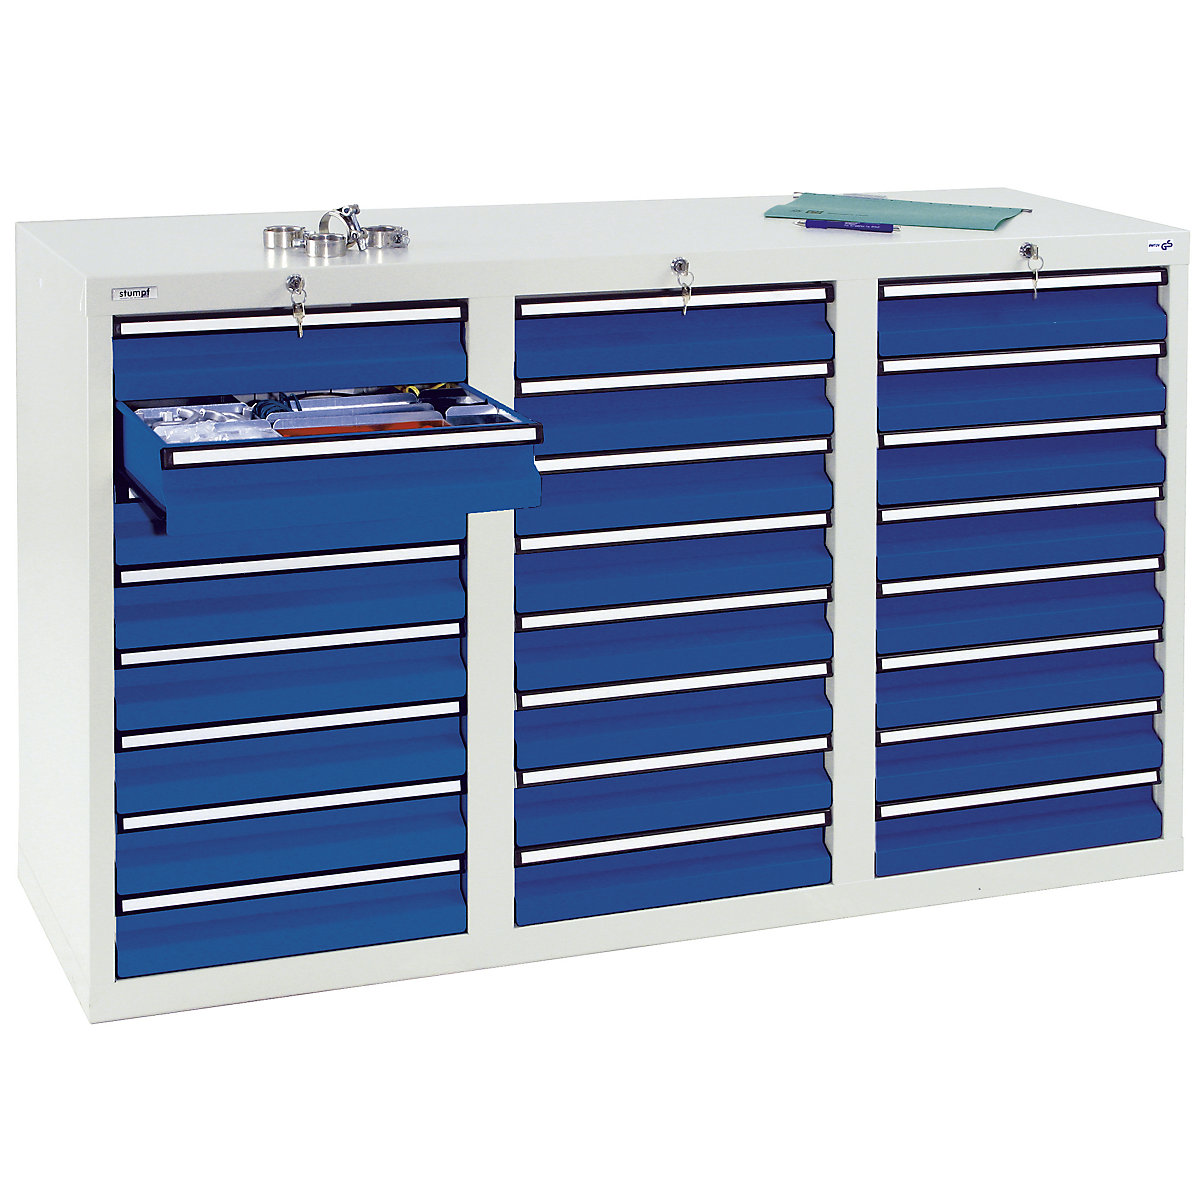 Armoire à tiroirs, h x l x p 900 x 1500 x 500 mm, 24 tiroirs hauteur 100 mm, corps gris, tiroirs bleu gentiane